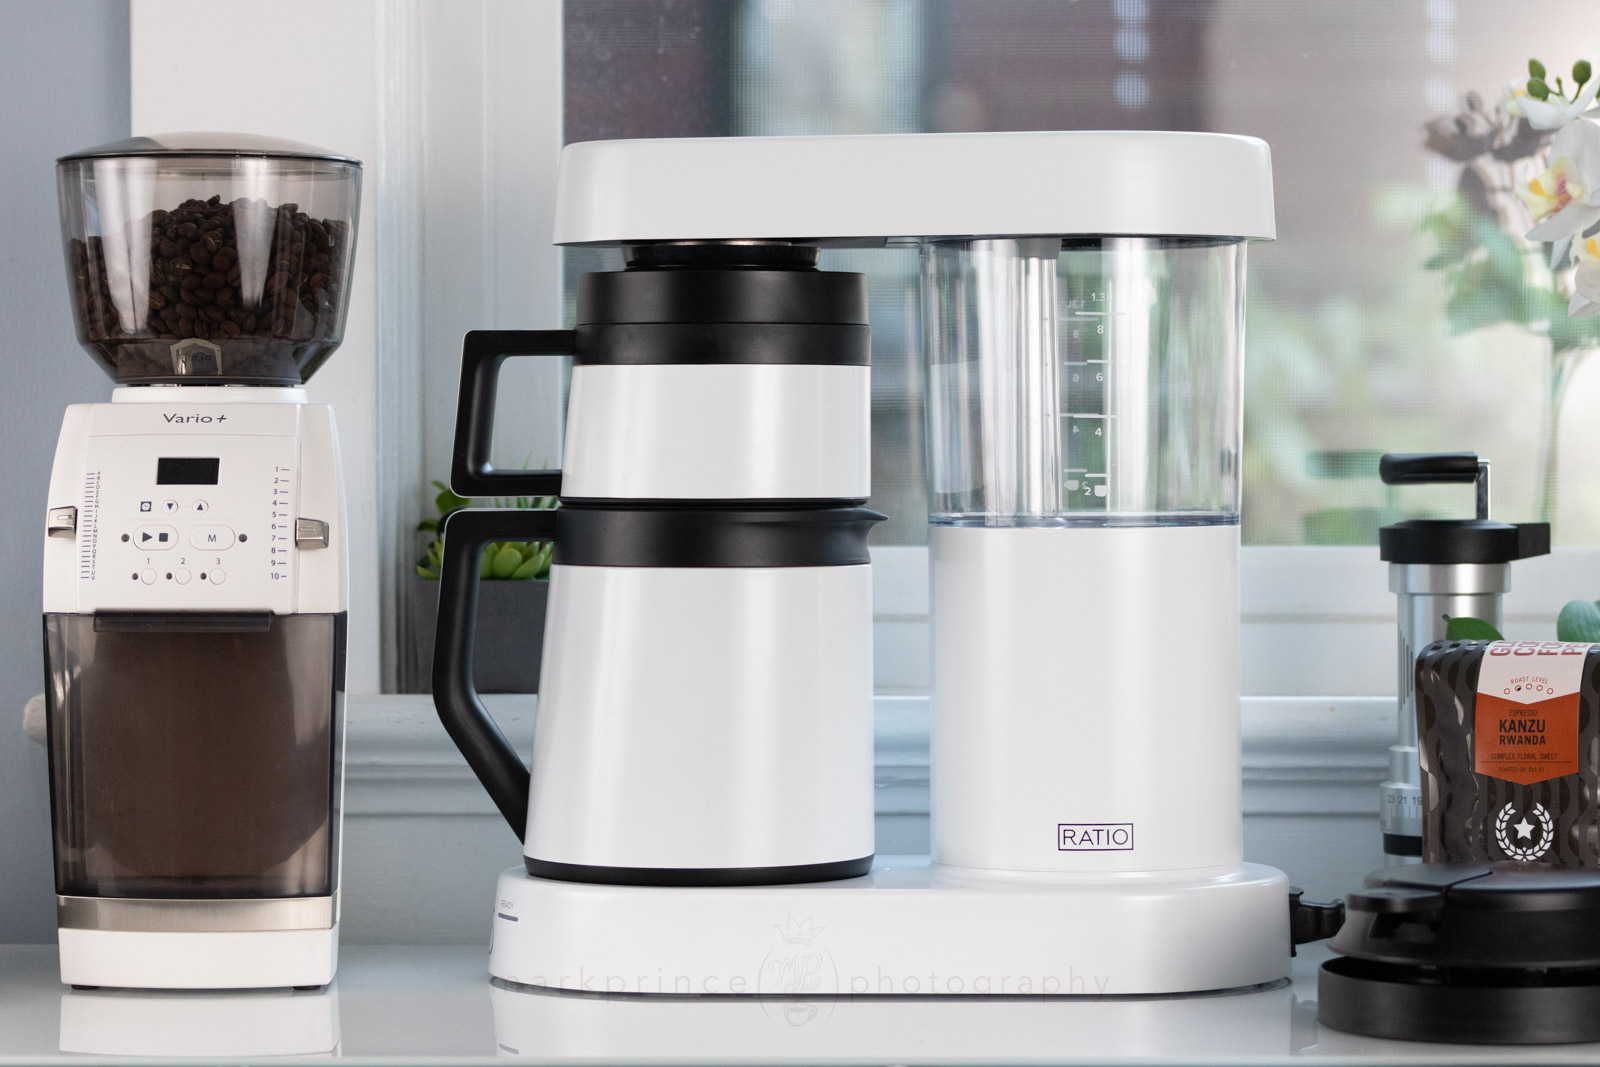 Bonavita 5 cup Coffee Brewer - appliances - by owner - sale